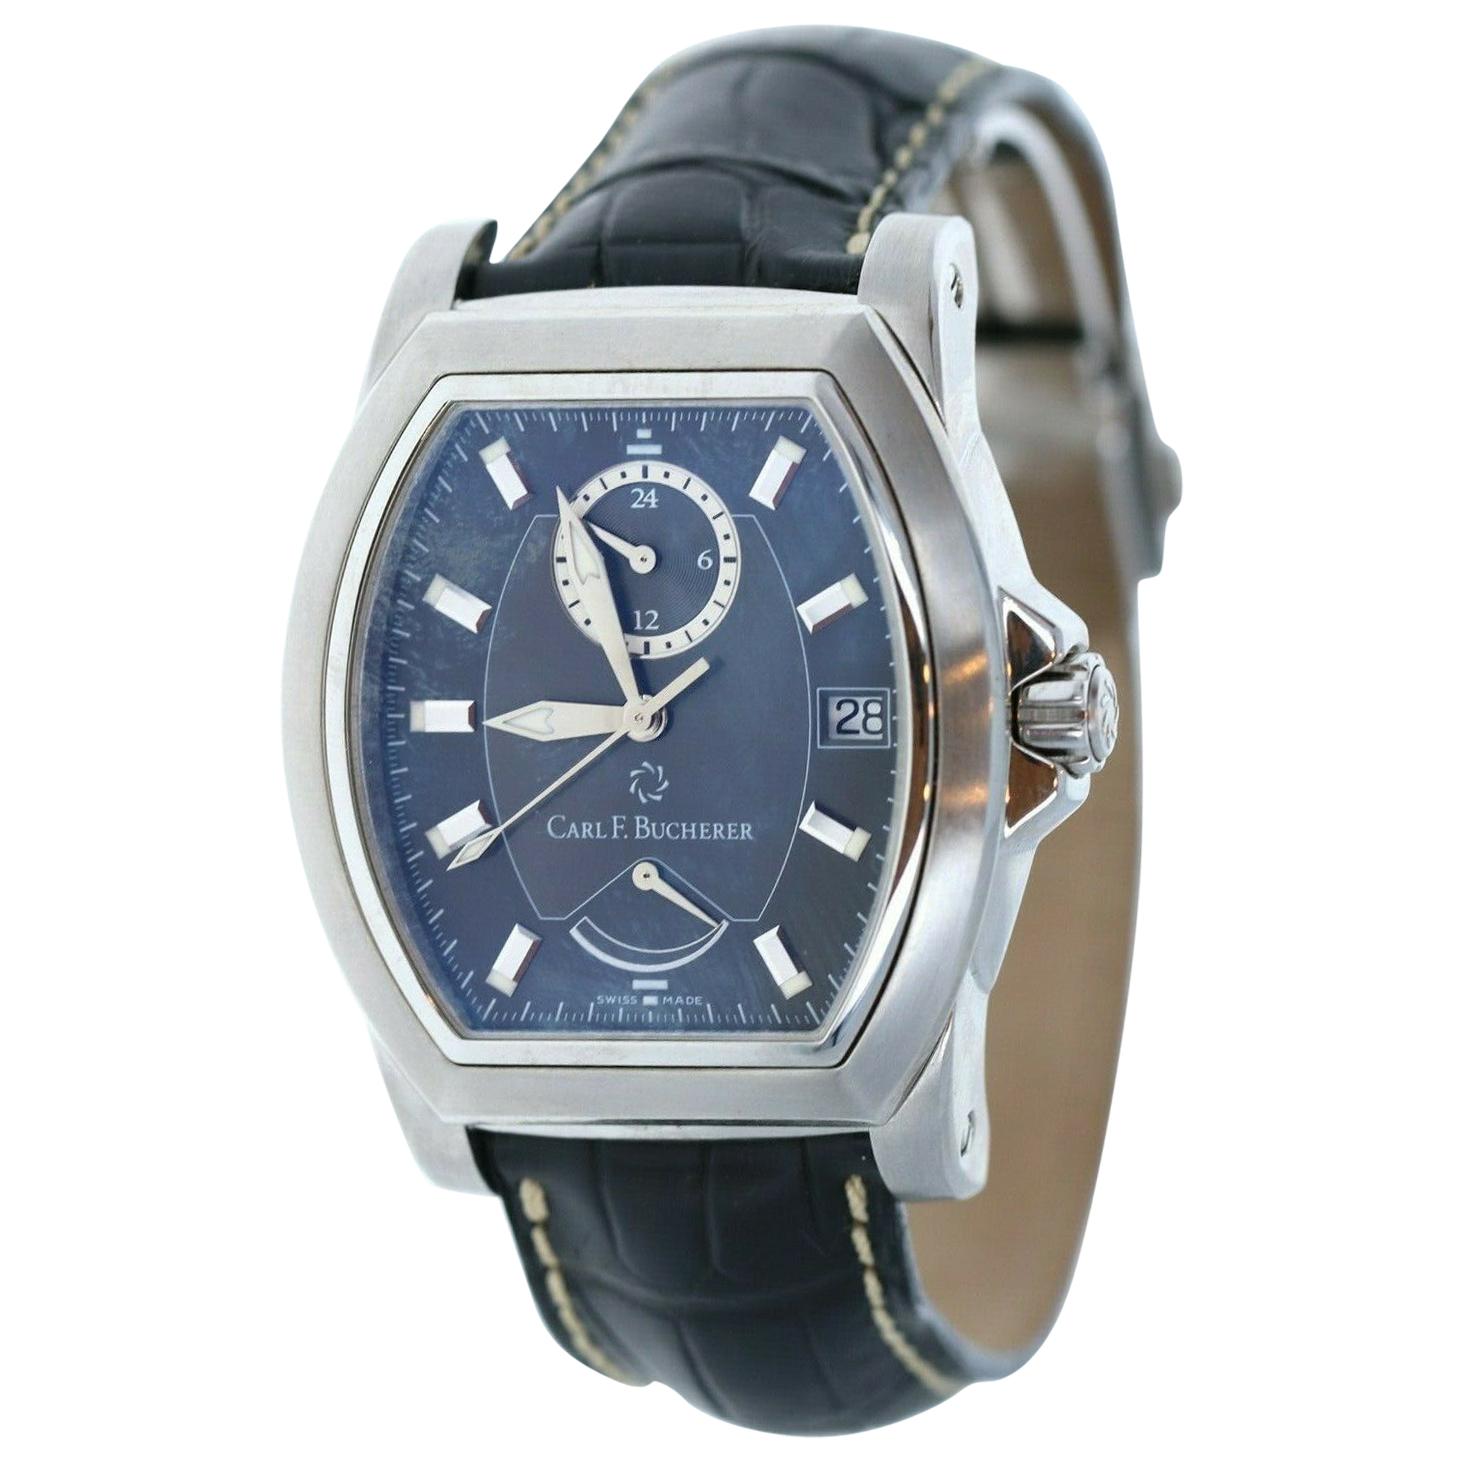 Carl F Bucherer Patravi T-24 Stainless Steel Watch 10612.08 For Sale